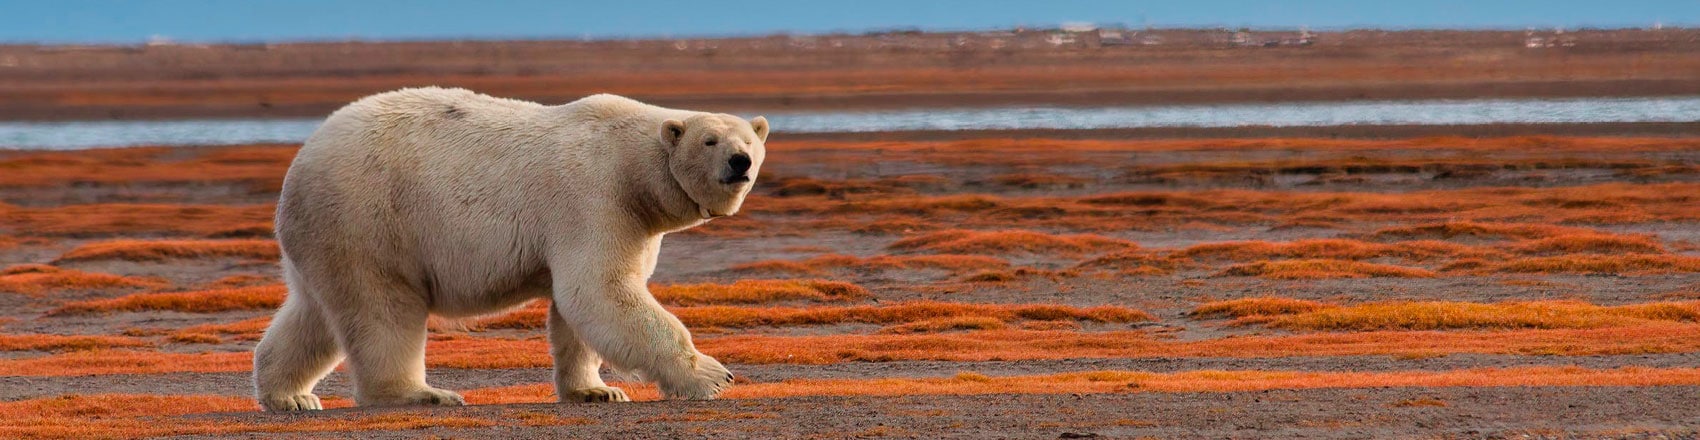 Polar bear walking in the Arctic